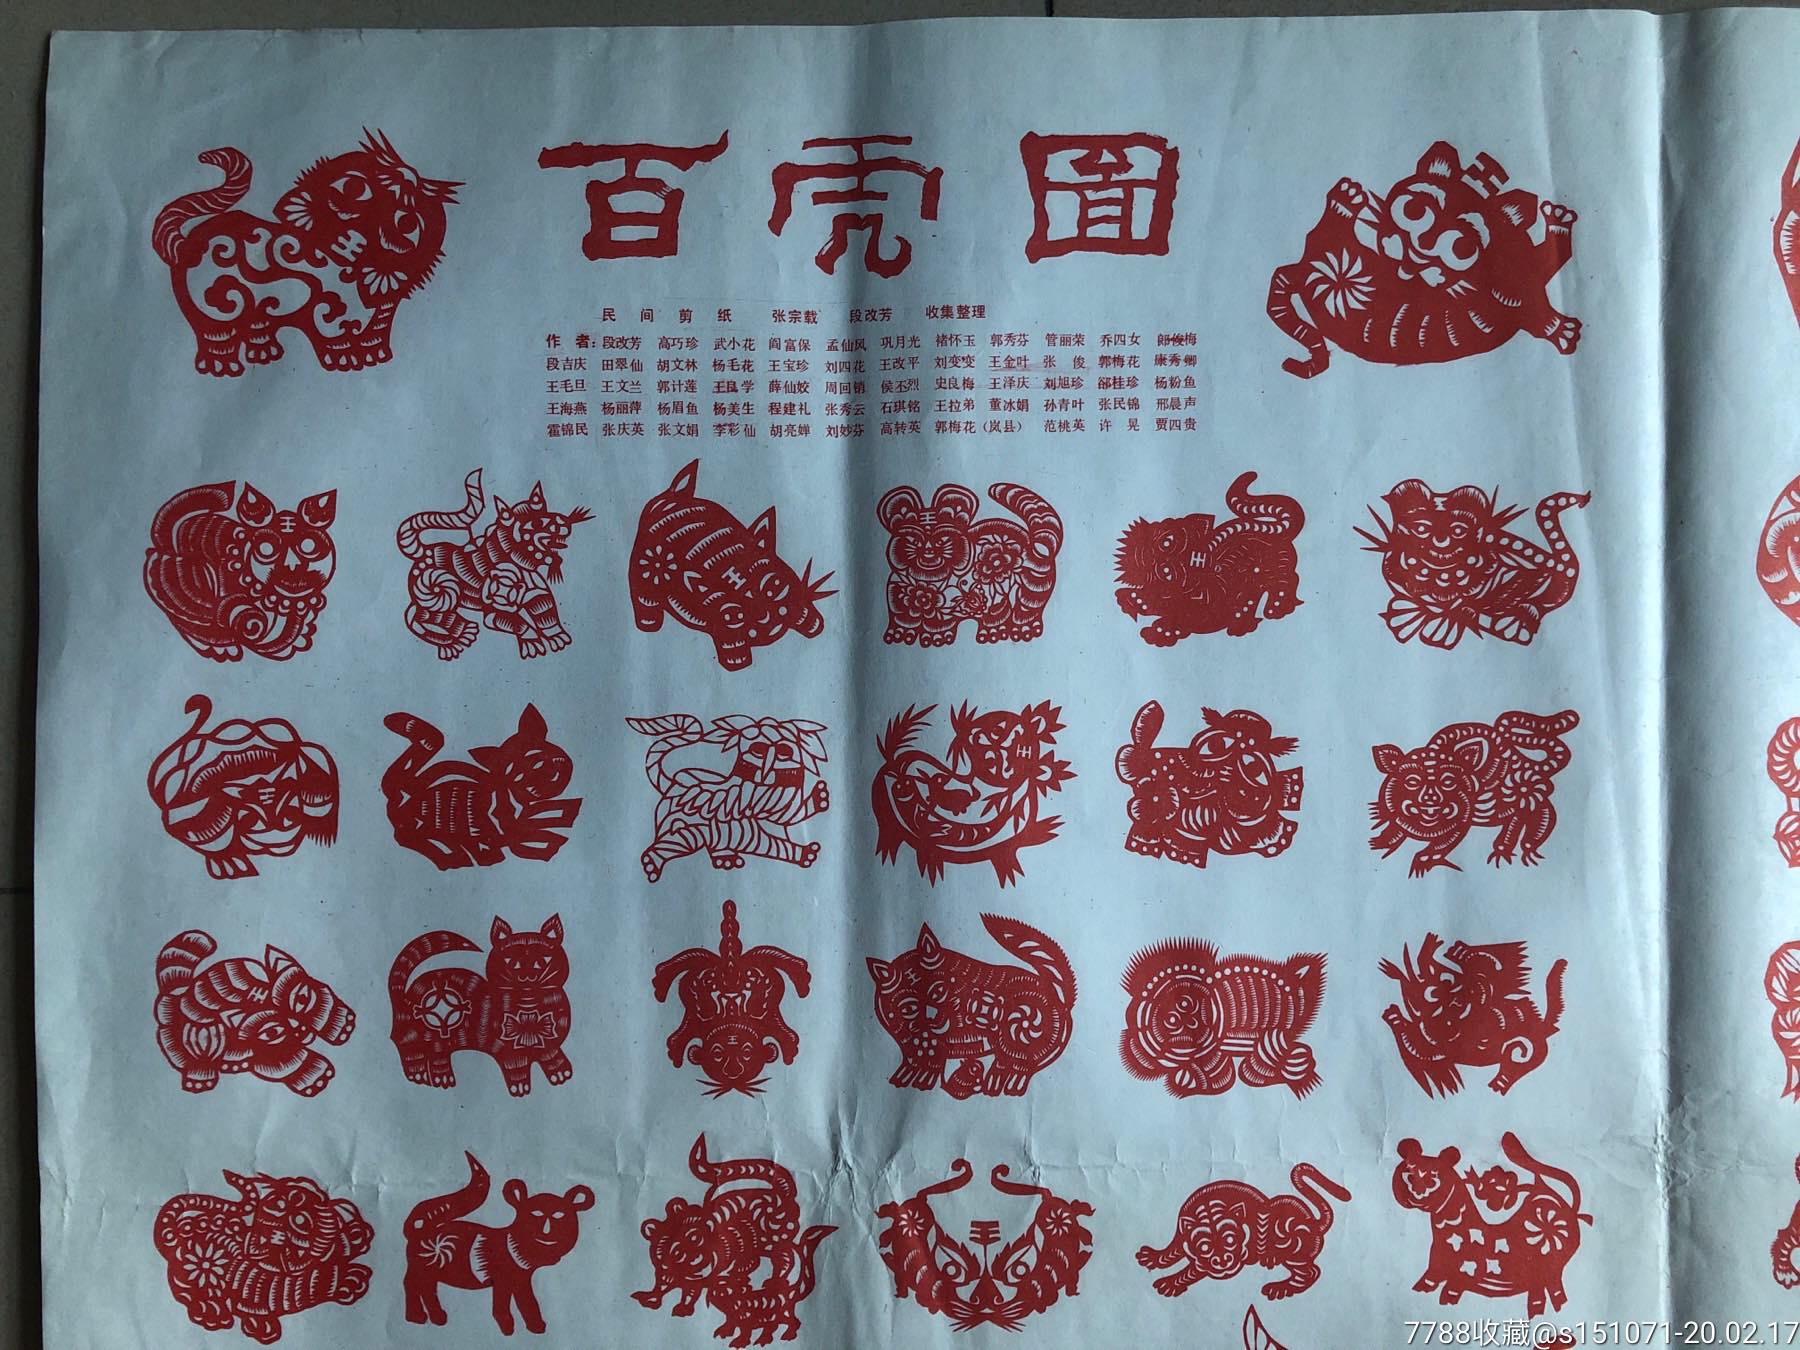 民间剪纸—百虎图-价格:58元-se71128212-其他印刷品